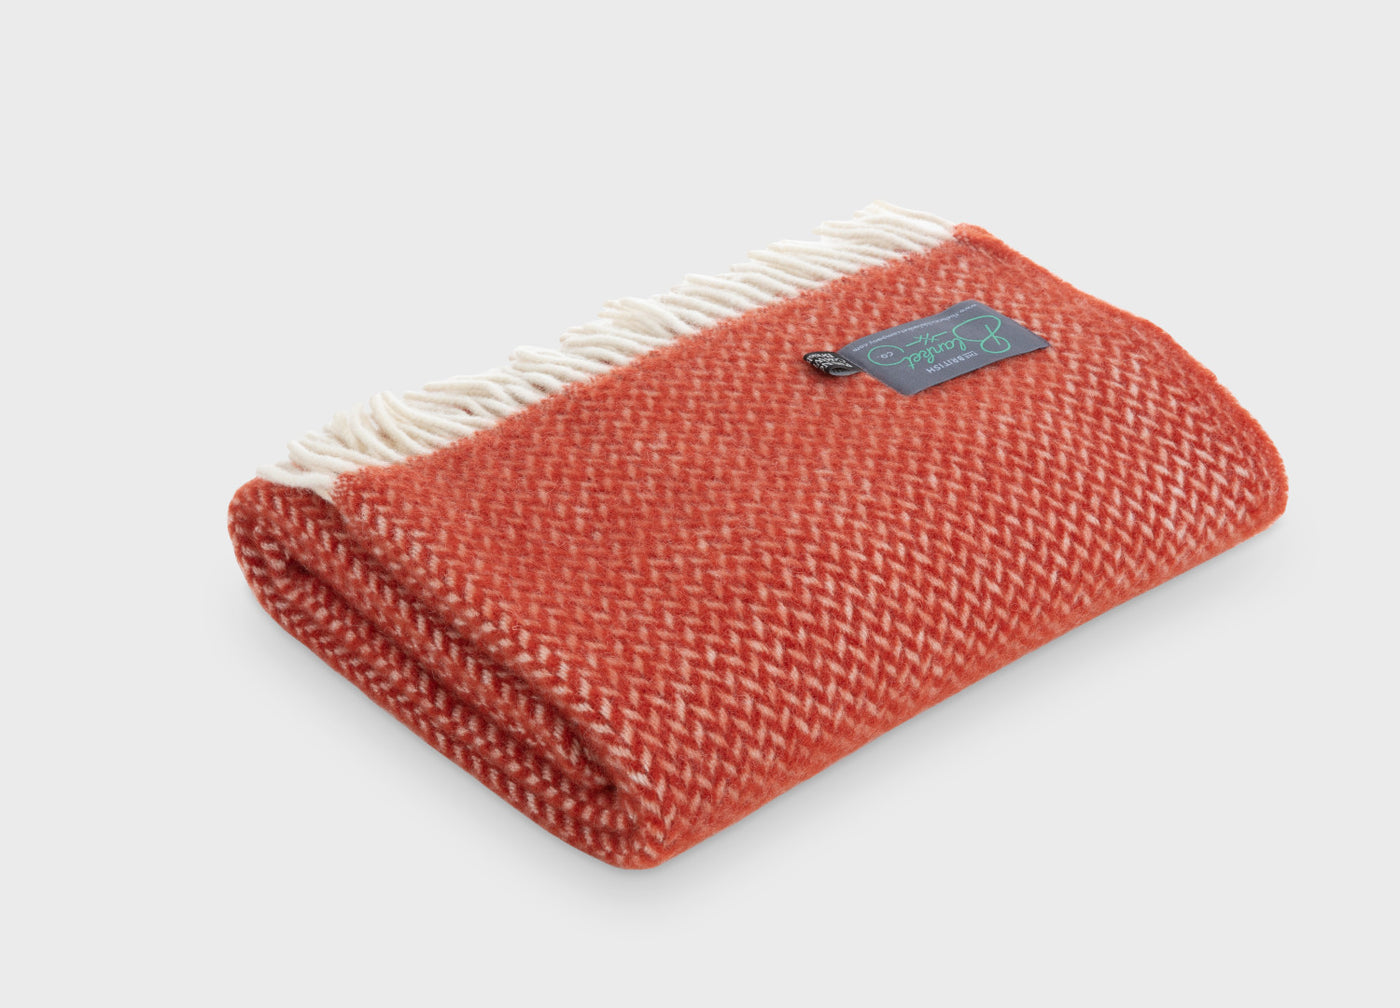 Folded red herringbone wool throw by The British Blanket Company